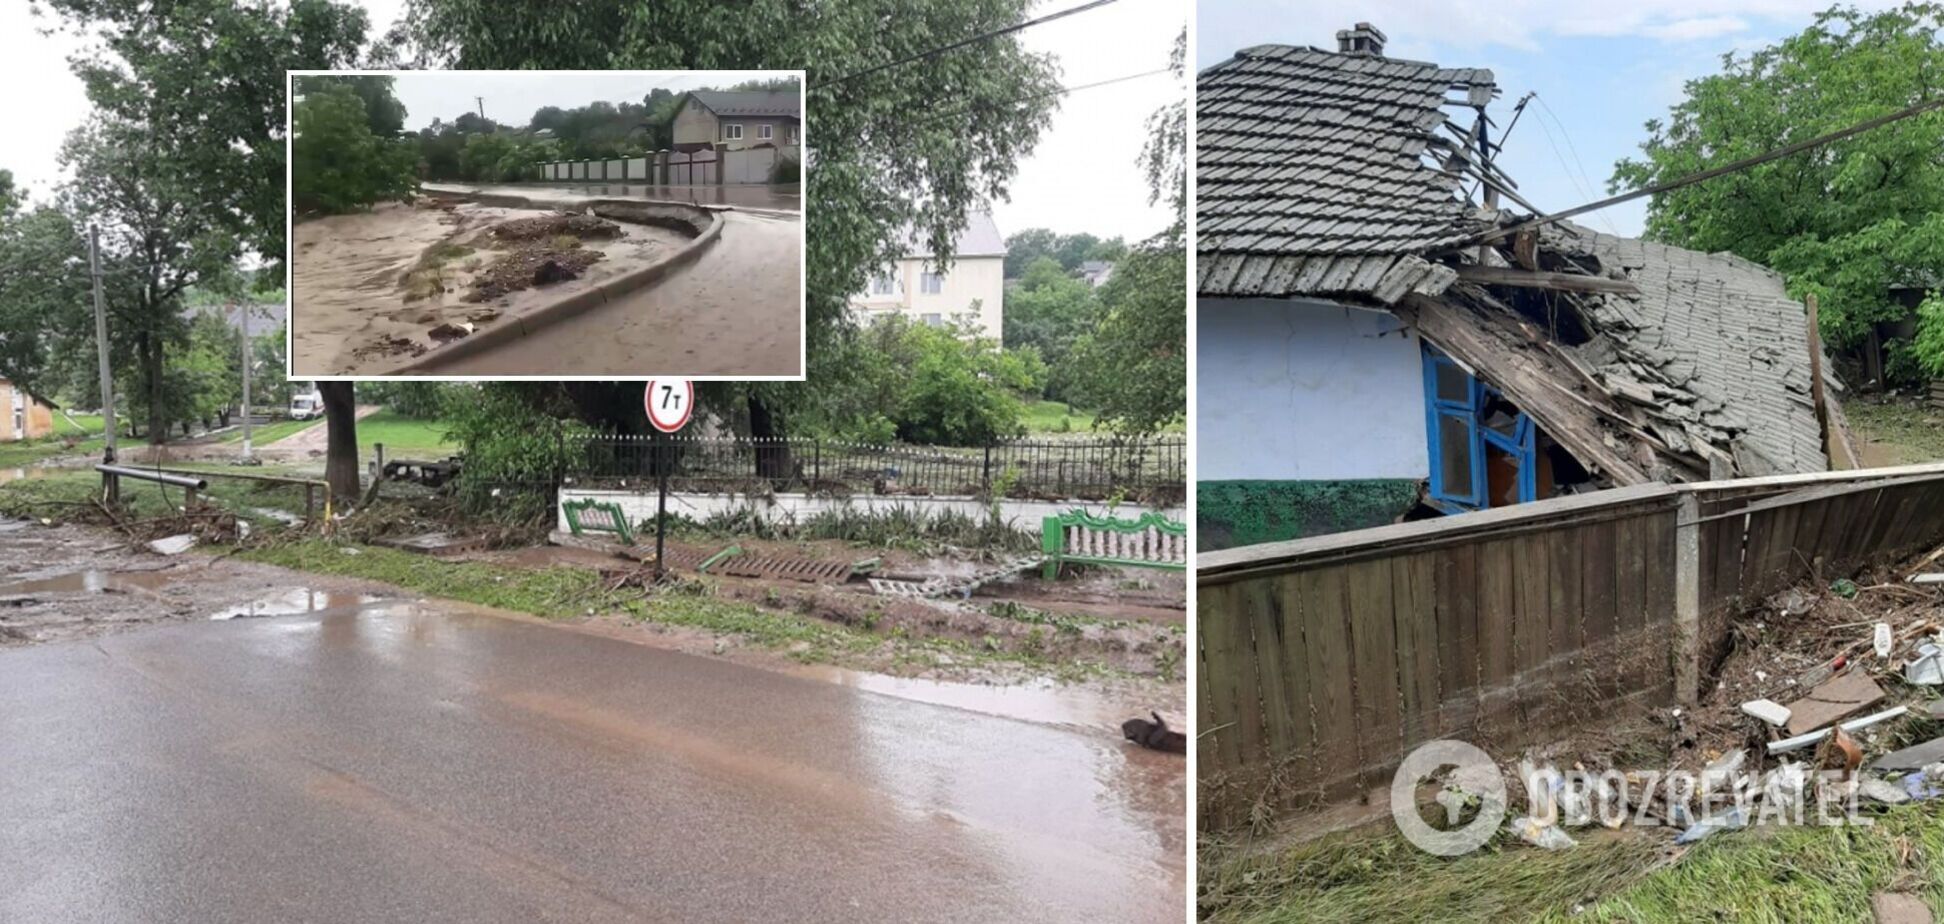 На Буковине затопило села, дороги превратились в реки: фото и видео непогоды